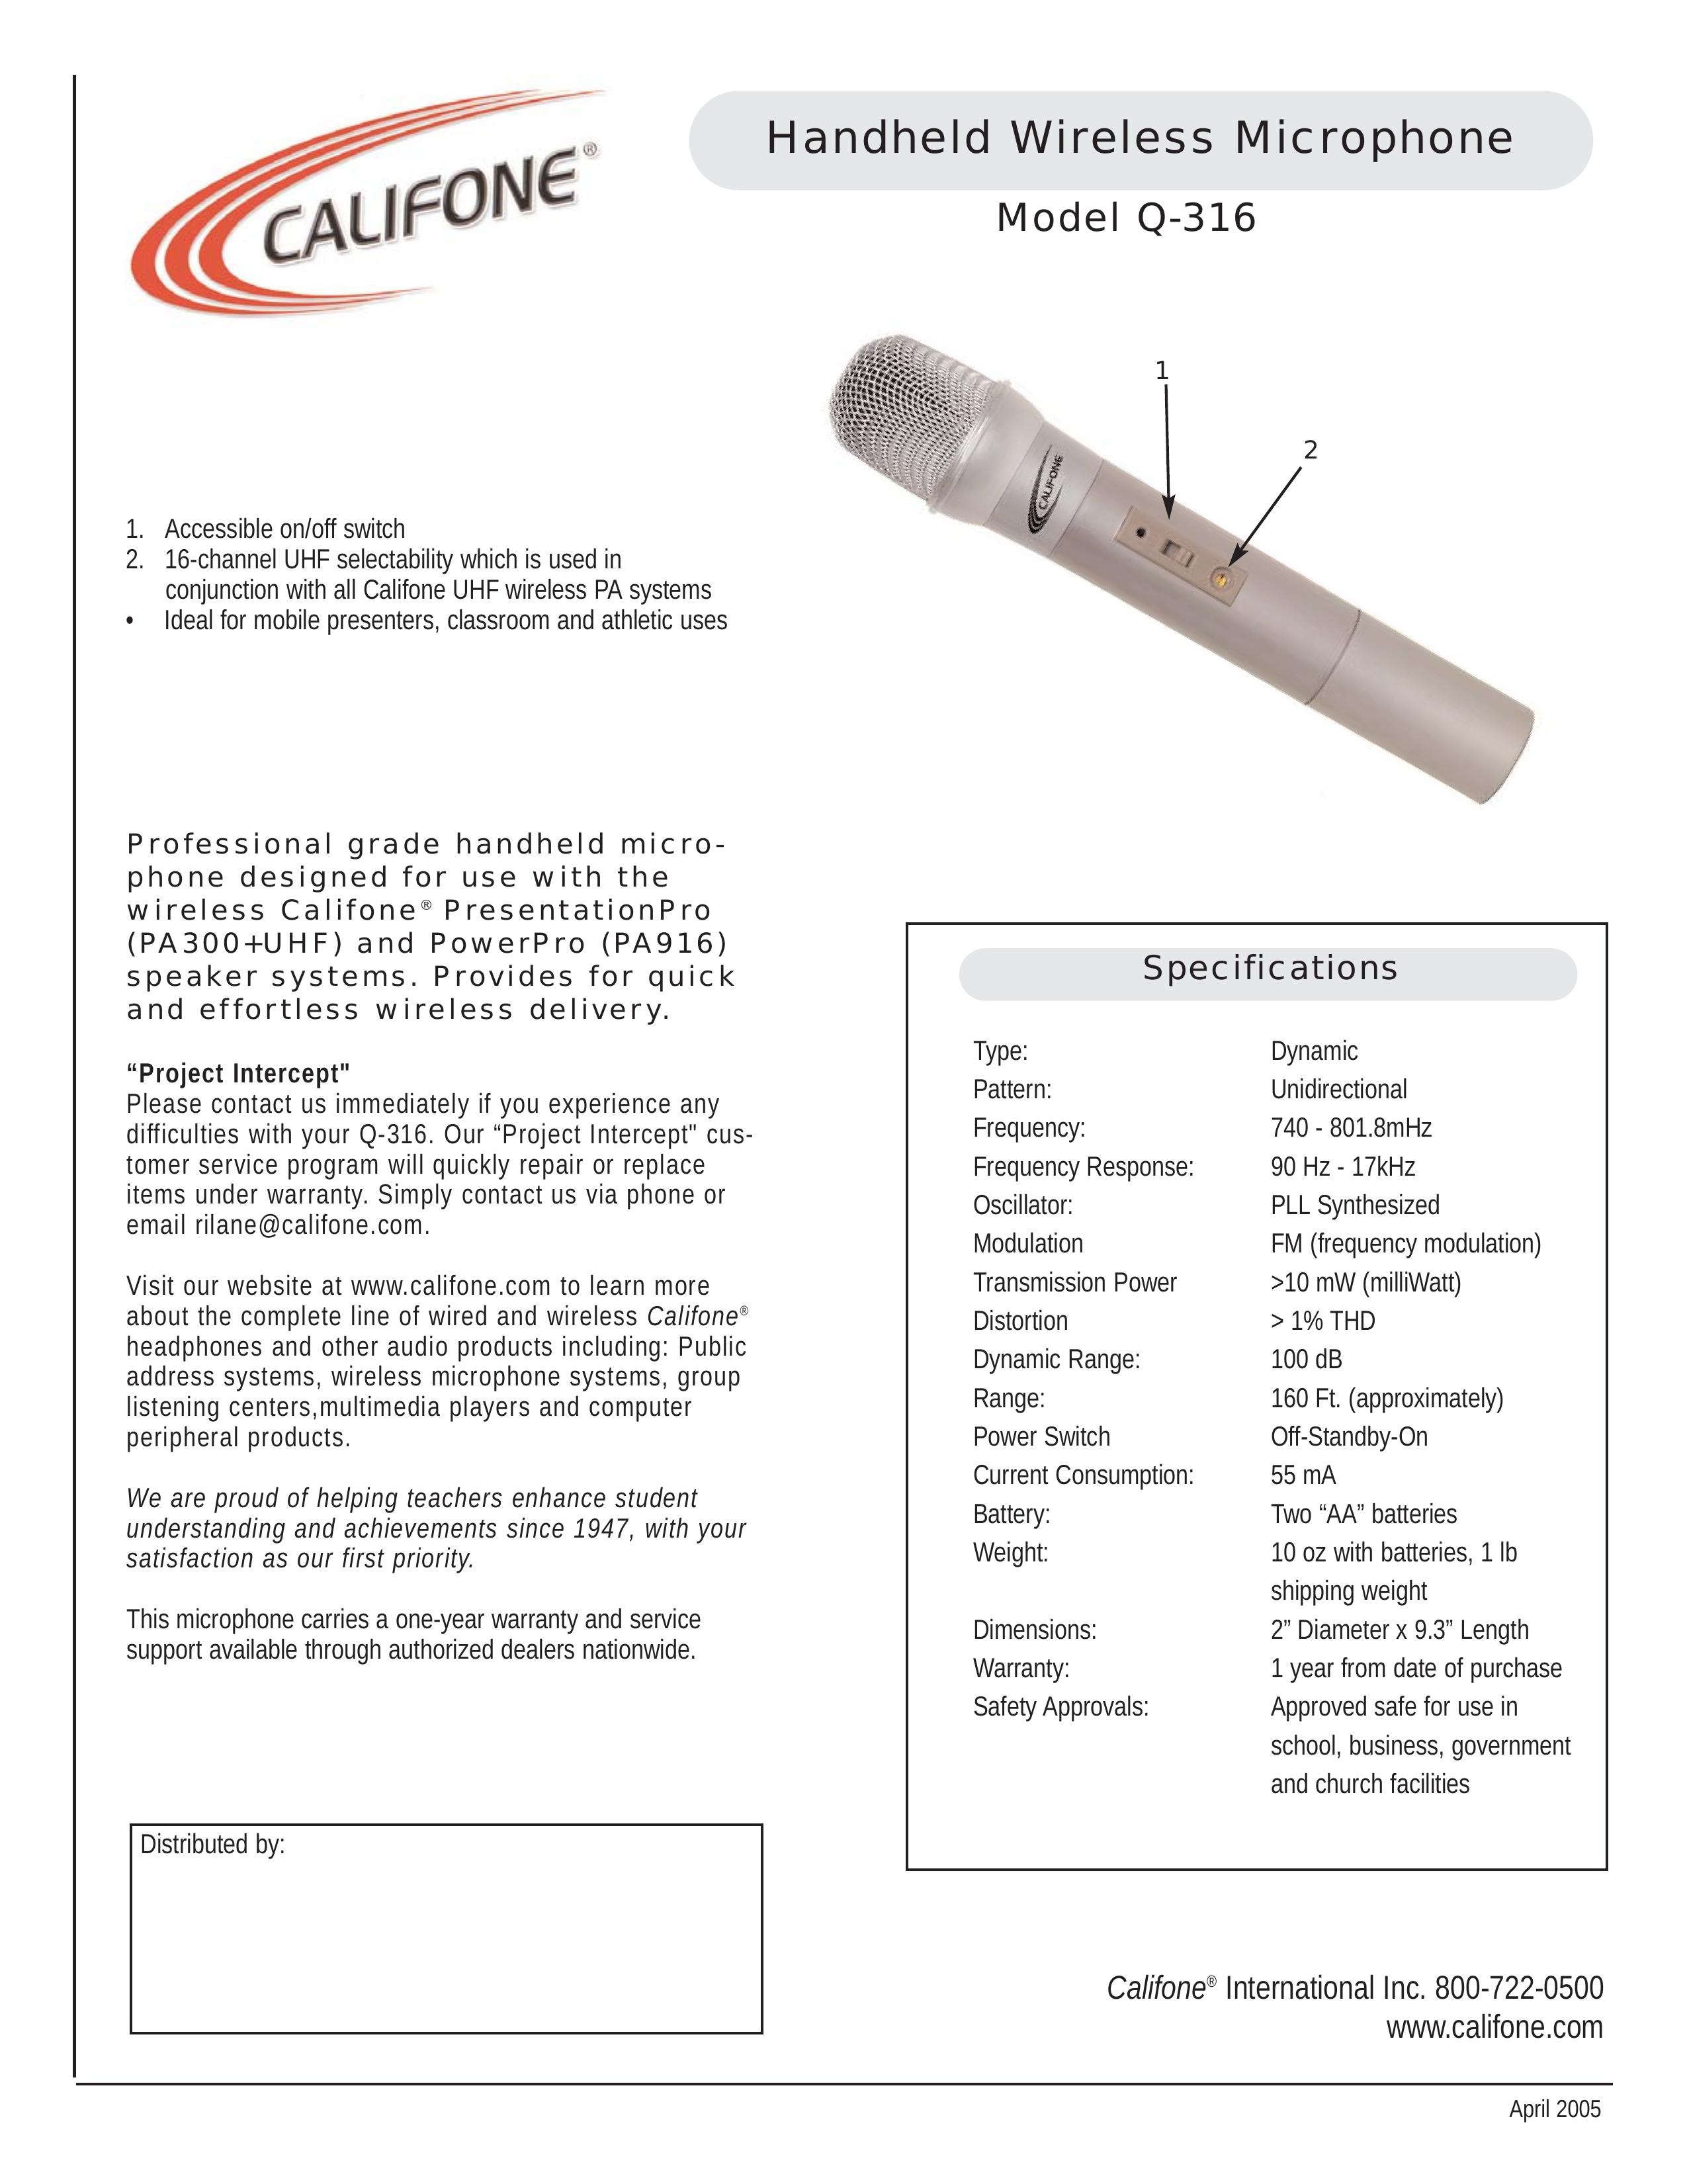 Califone Q-316 Microphone User Manual